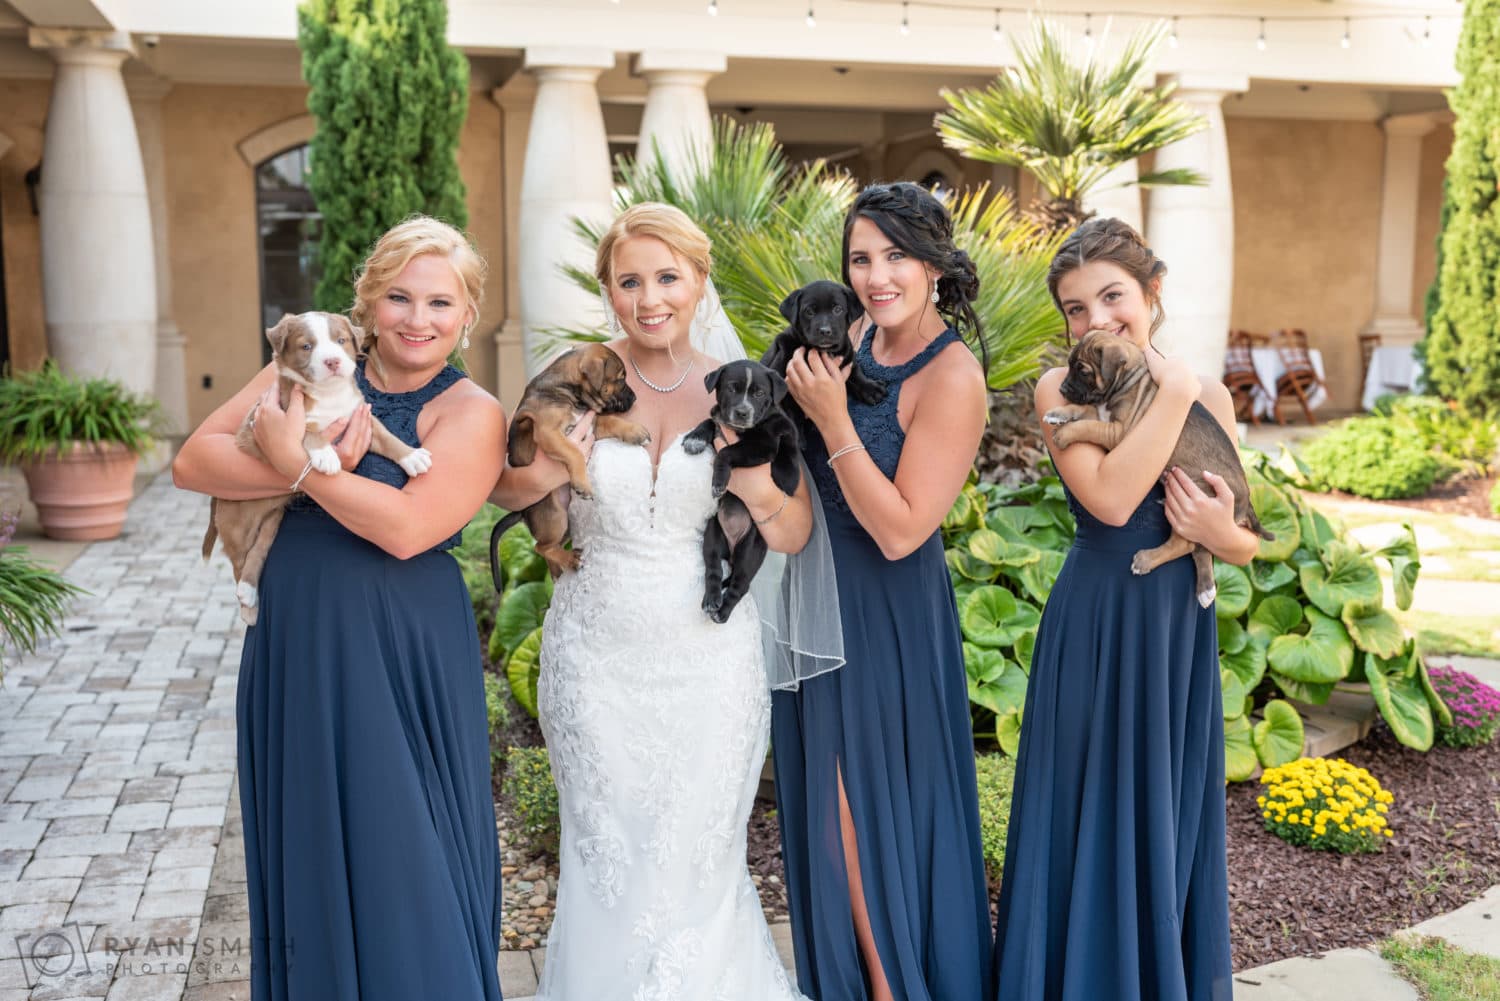 Bridesmaids holding puppies - Tamron SP 35mm f/1.4 Nikon - Aperture set at f/2.8 - Conway Riverwalk